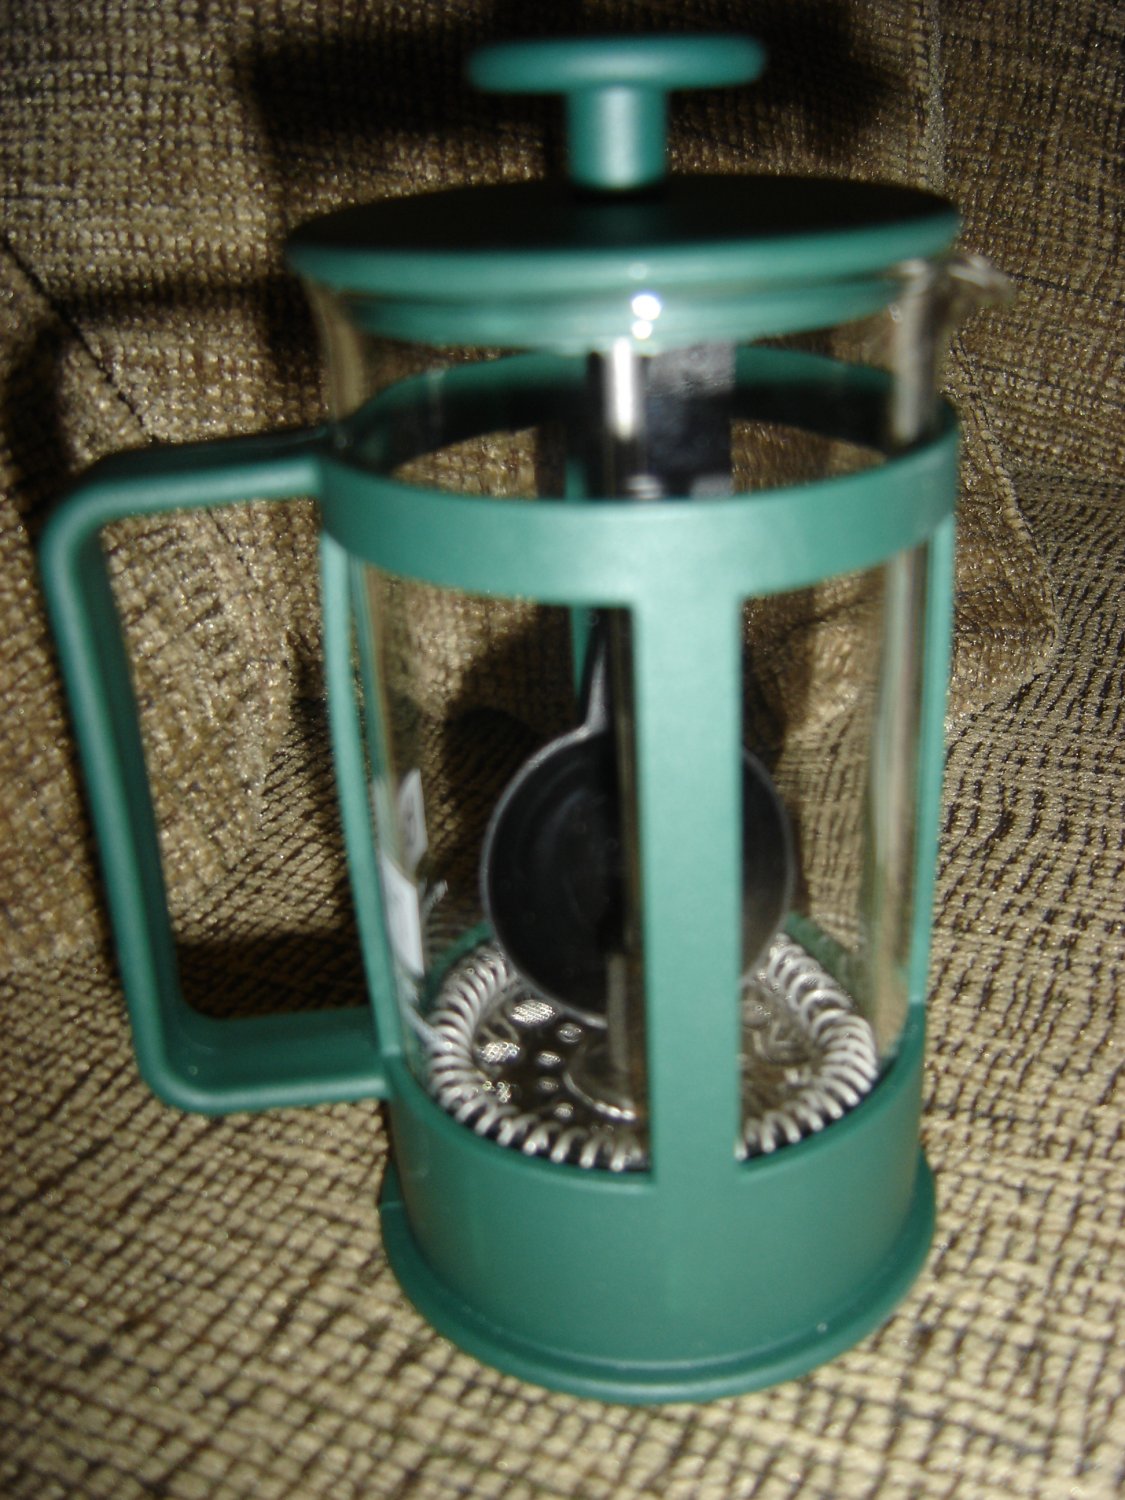 STARBUCKS BODUM 3 CUP NO. 1783 S FRENCH PRESS COFFEE MAKER - BRAND NEW!